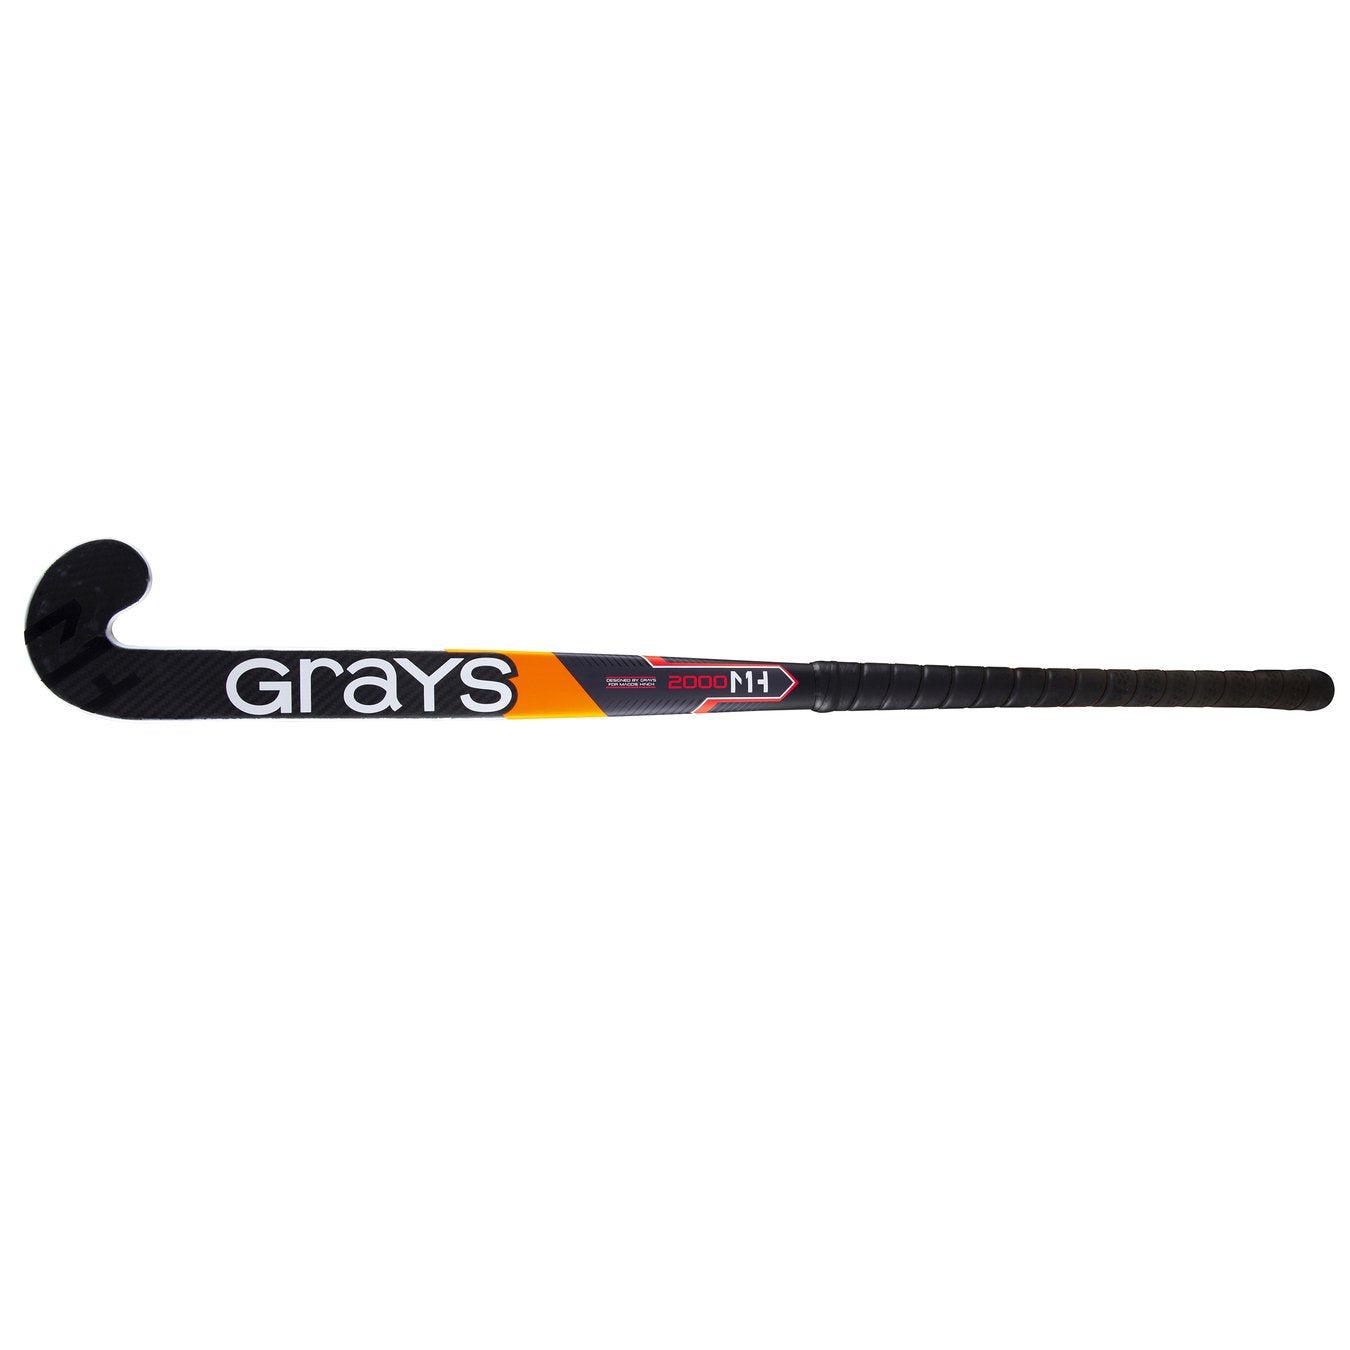 Grays MH1 GK2000 Ultrabow Junior Goalkeeping Composite Hockey Stick 2022-Bruntsfield Sports Online